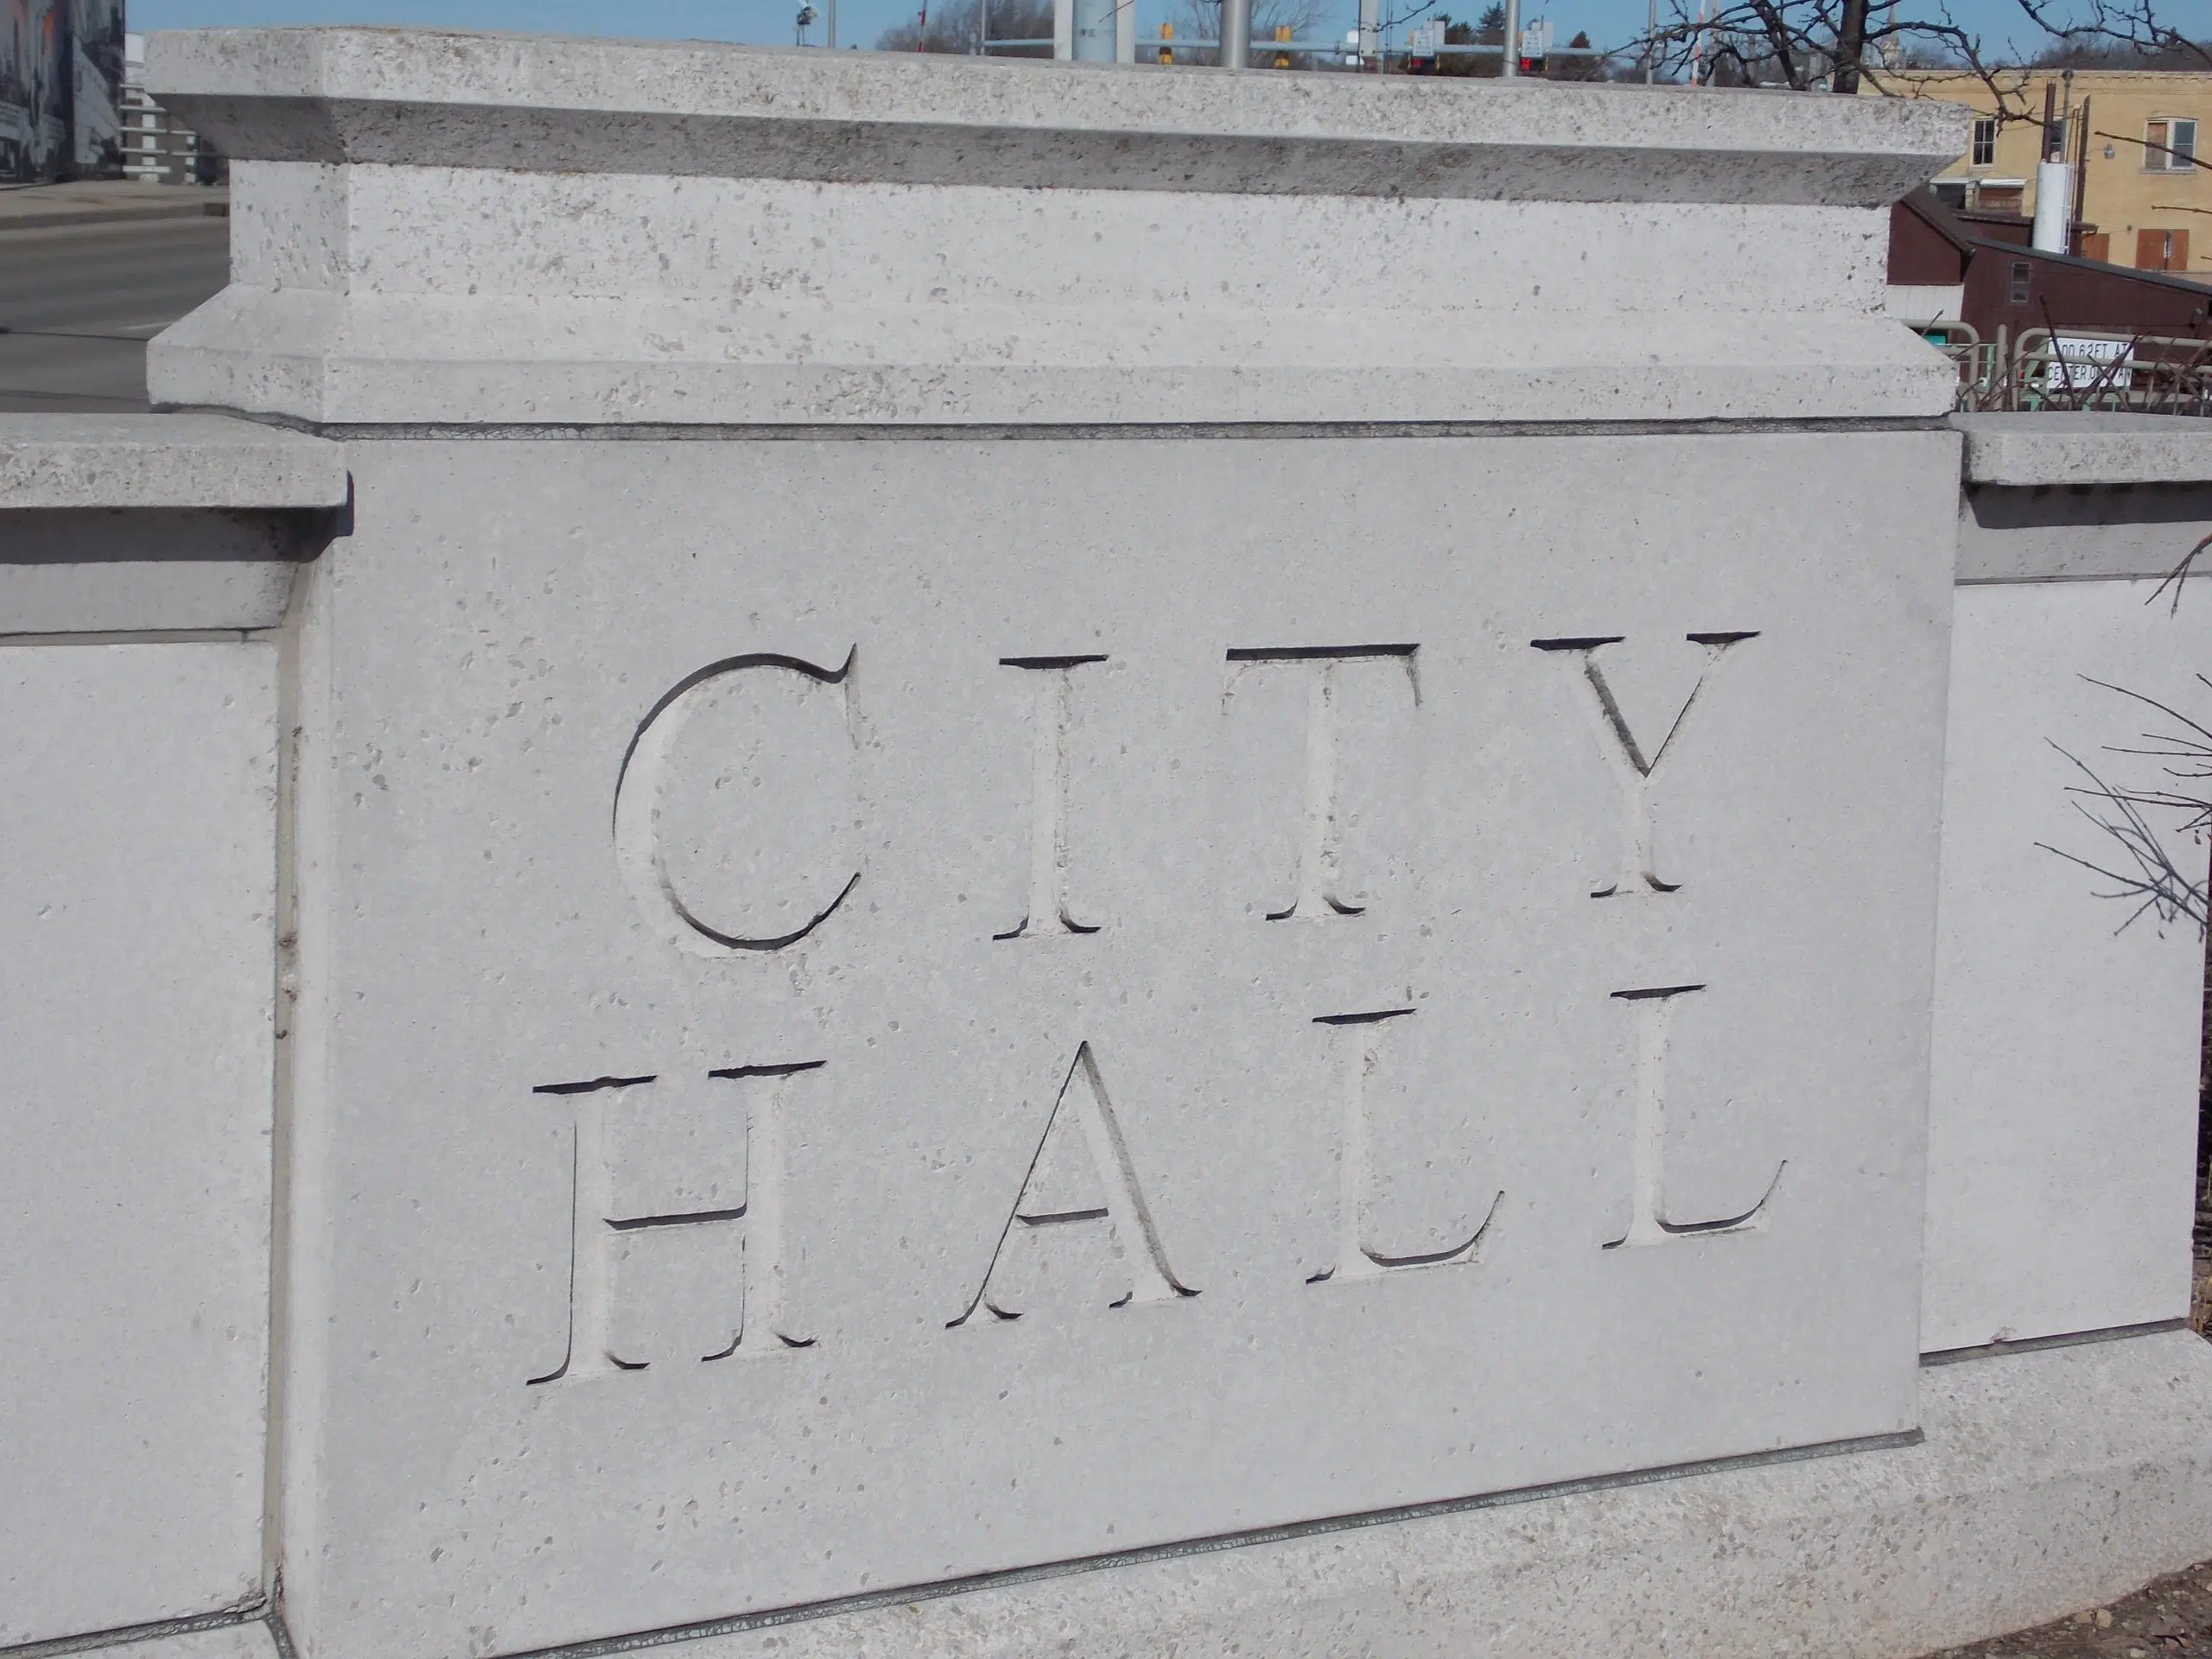 Marshfield Opens New City Hall